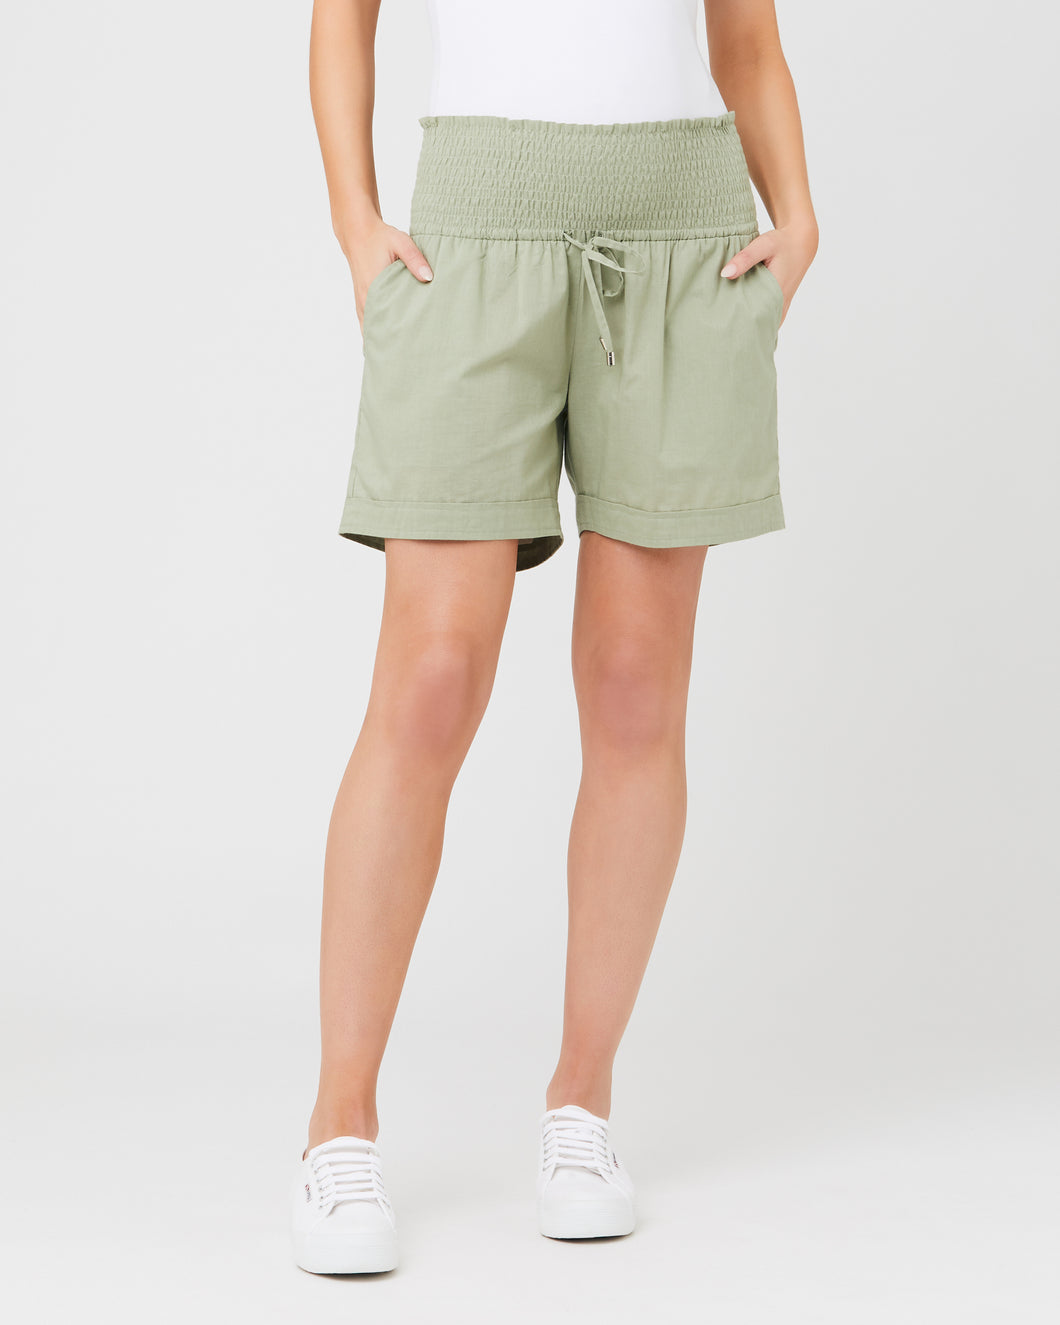 Ripe Maternity - Philly cotton shorts  leaf  | MILD zwangerschapsboetiek - zwangerschapskleding bij Mechelen